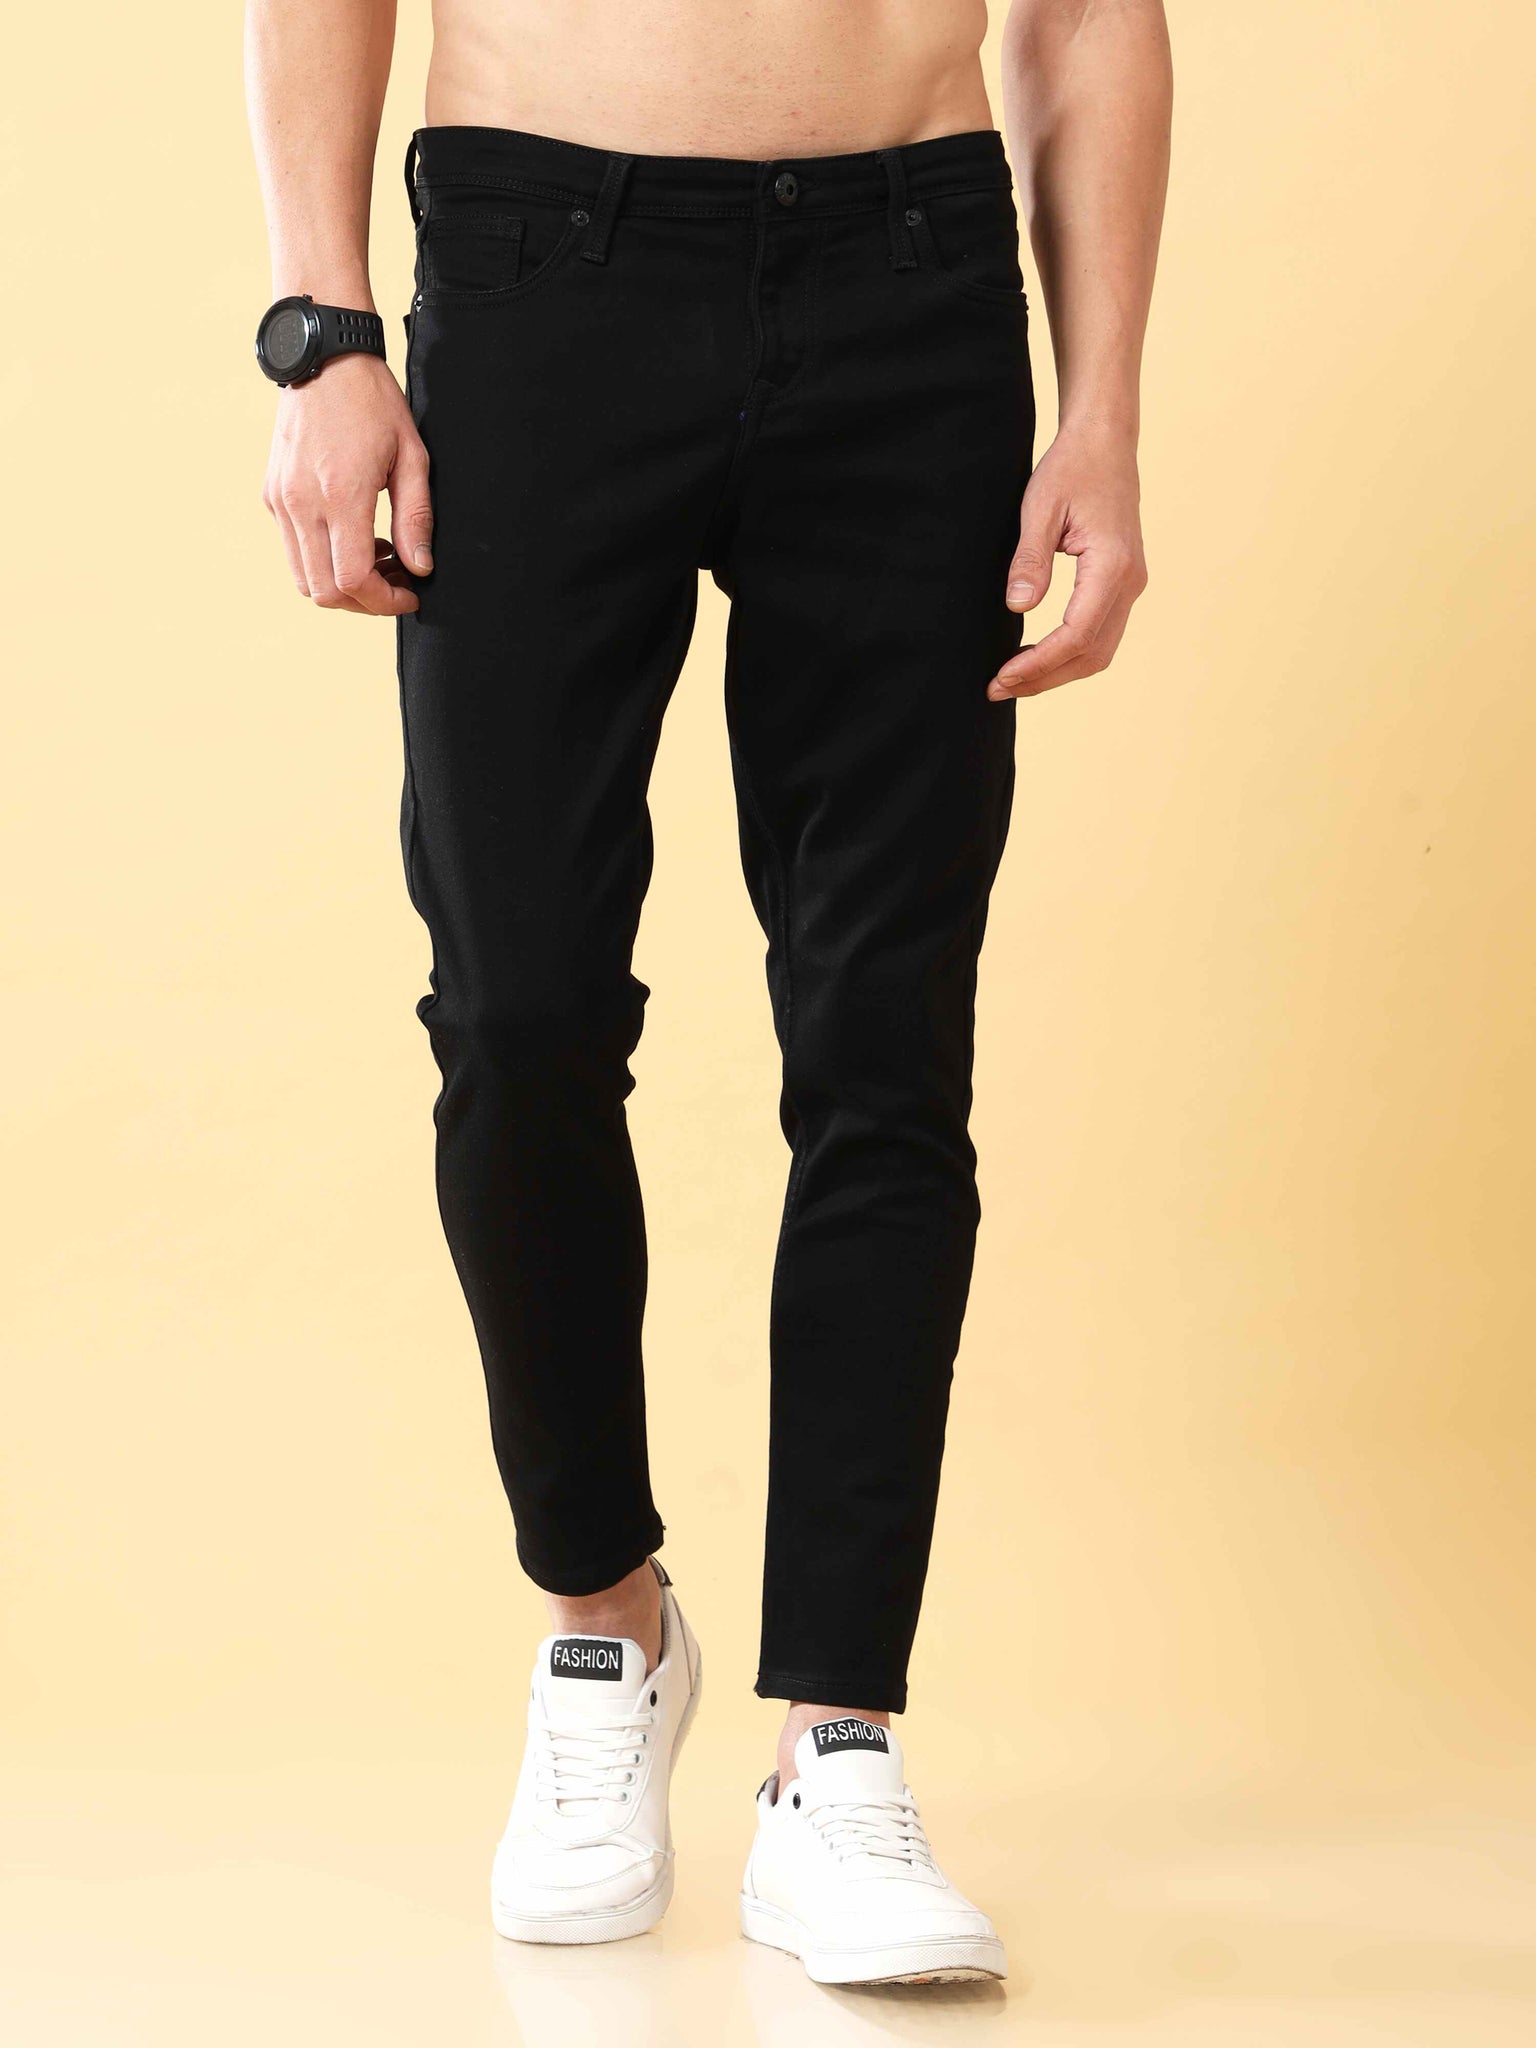 Buy Classic Jet Black Jeans for Men Online at Great Price – Badmaash